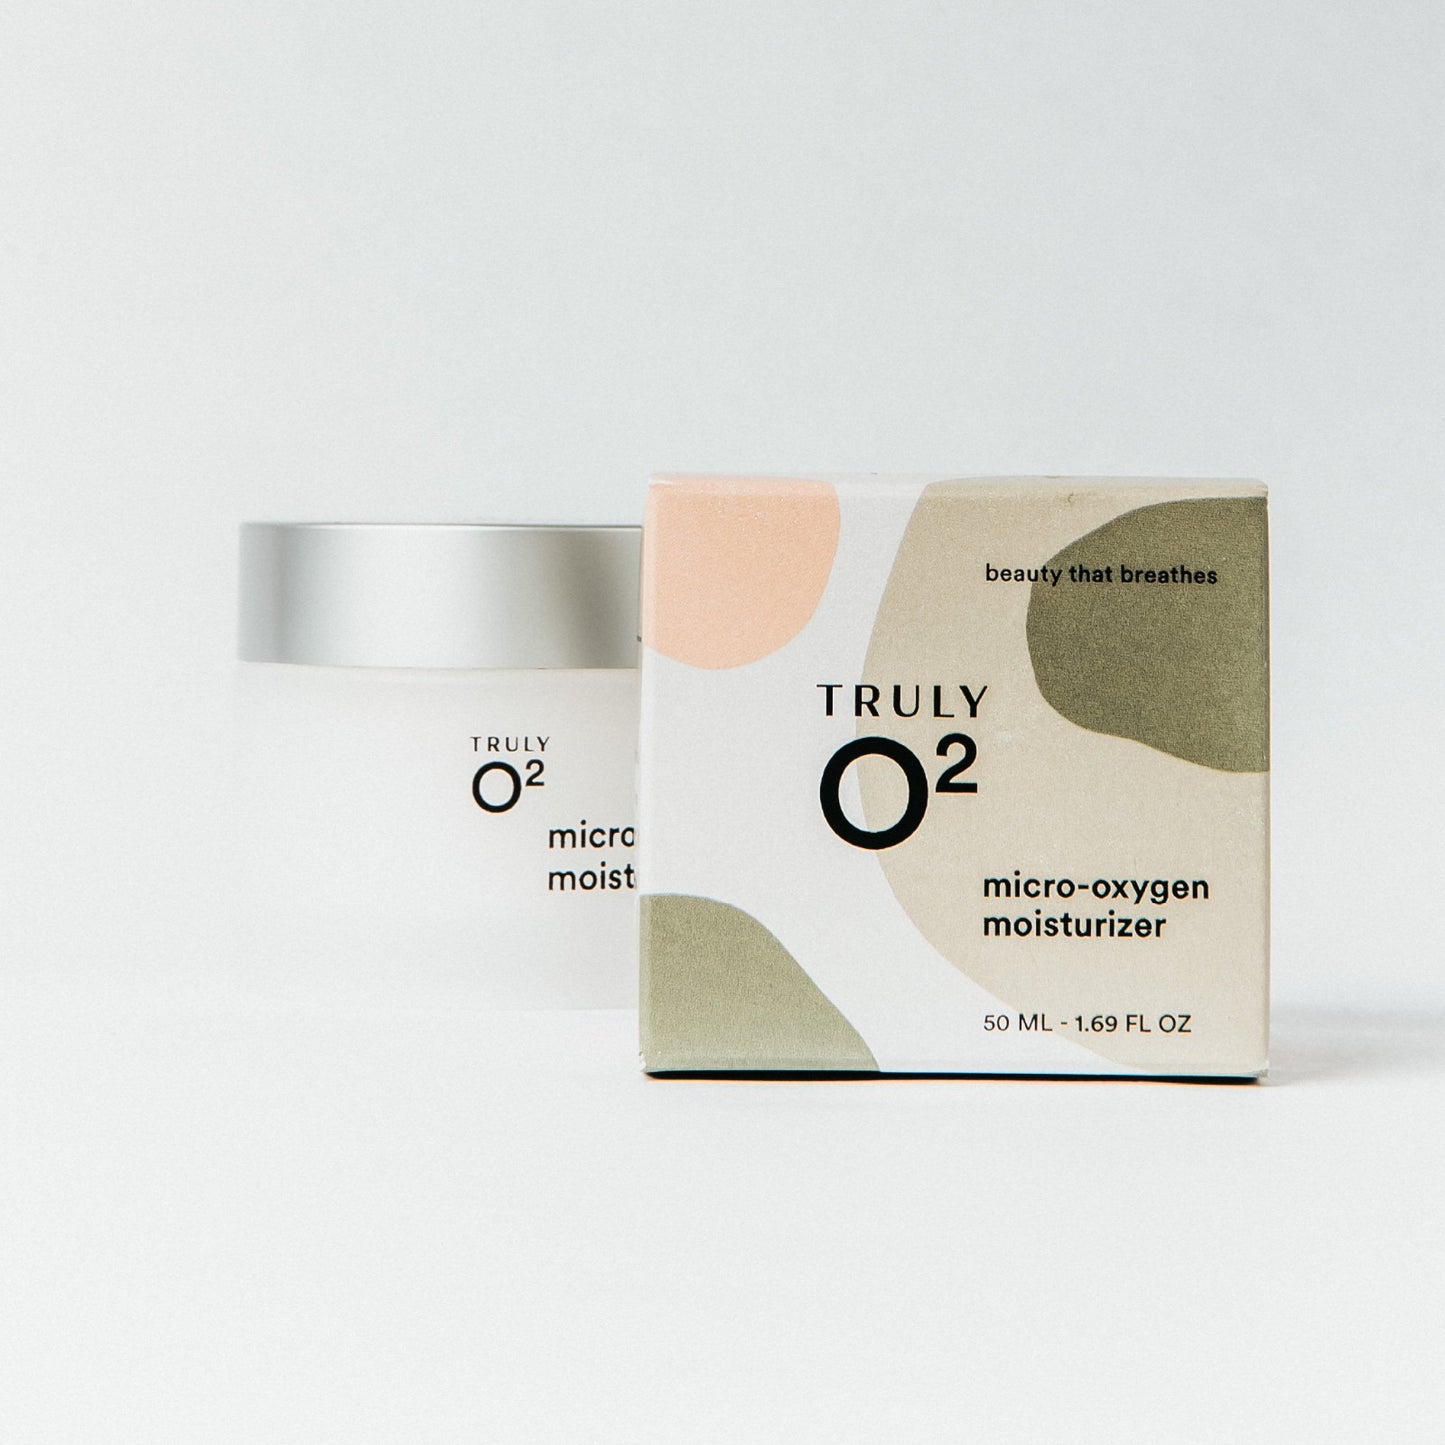 Truly O2 micro-oxygen moisturizer face cream box and jar